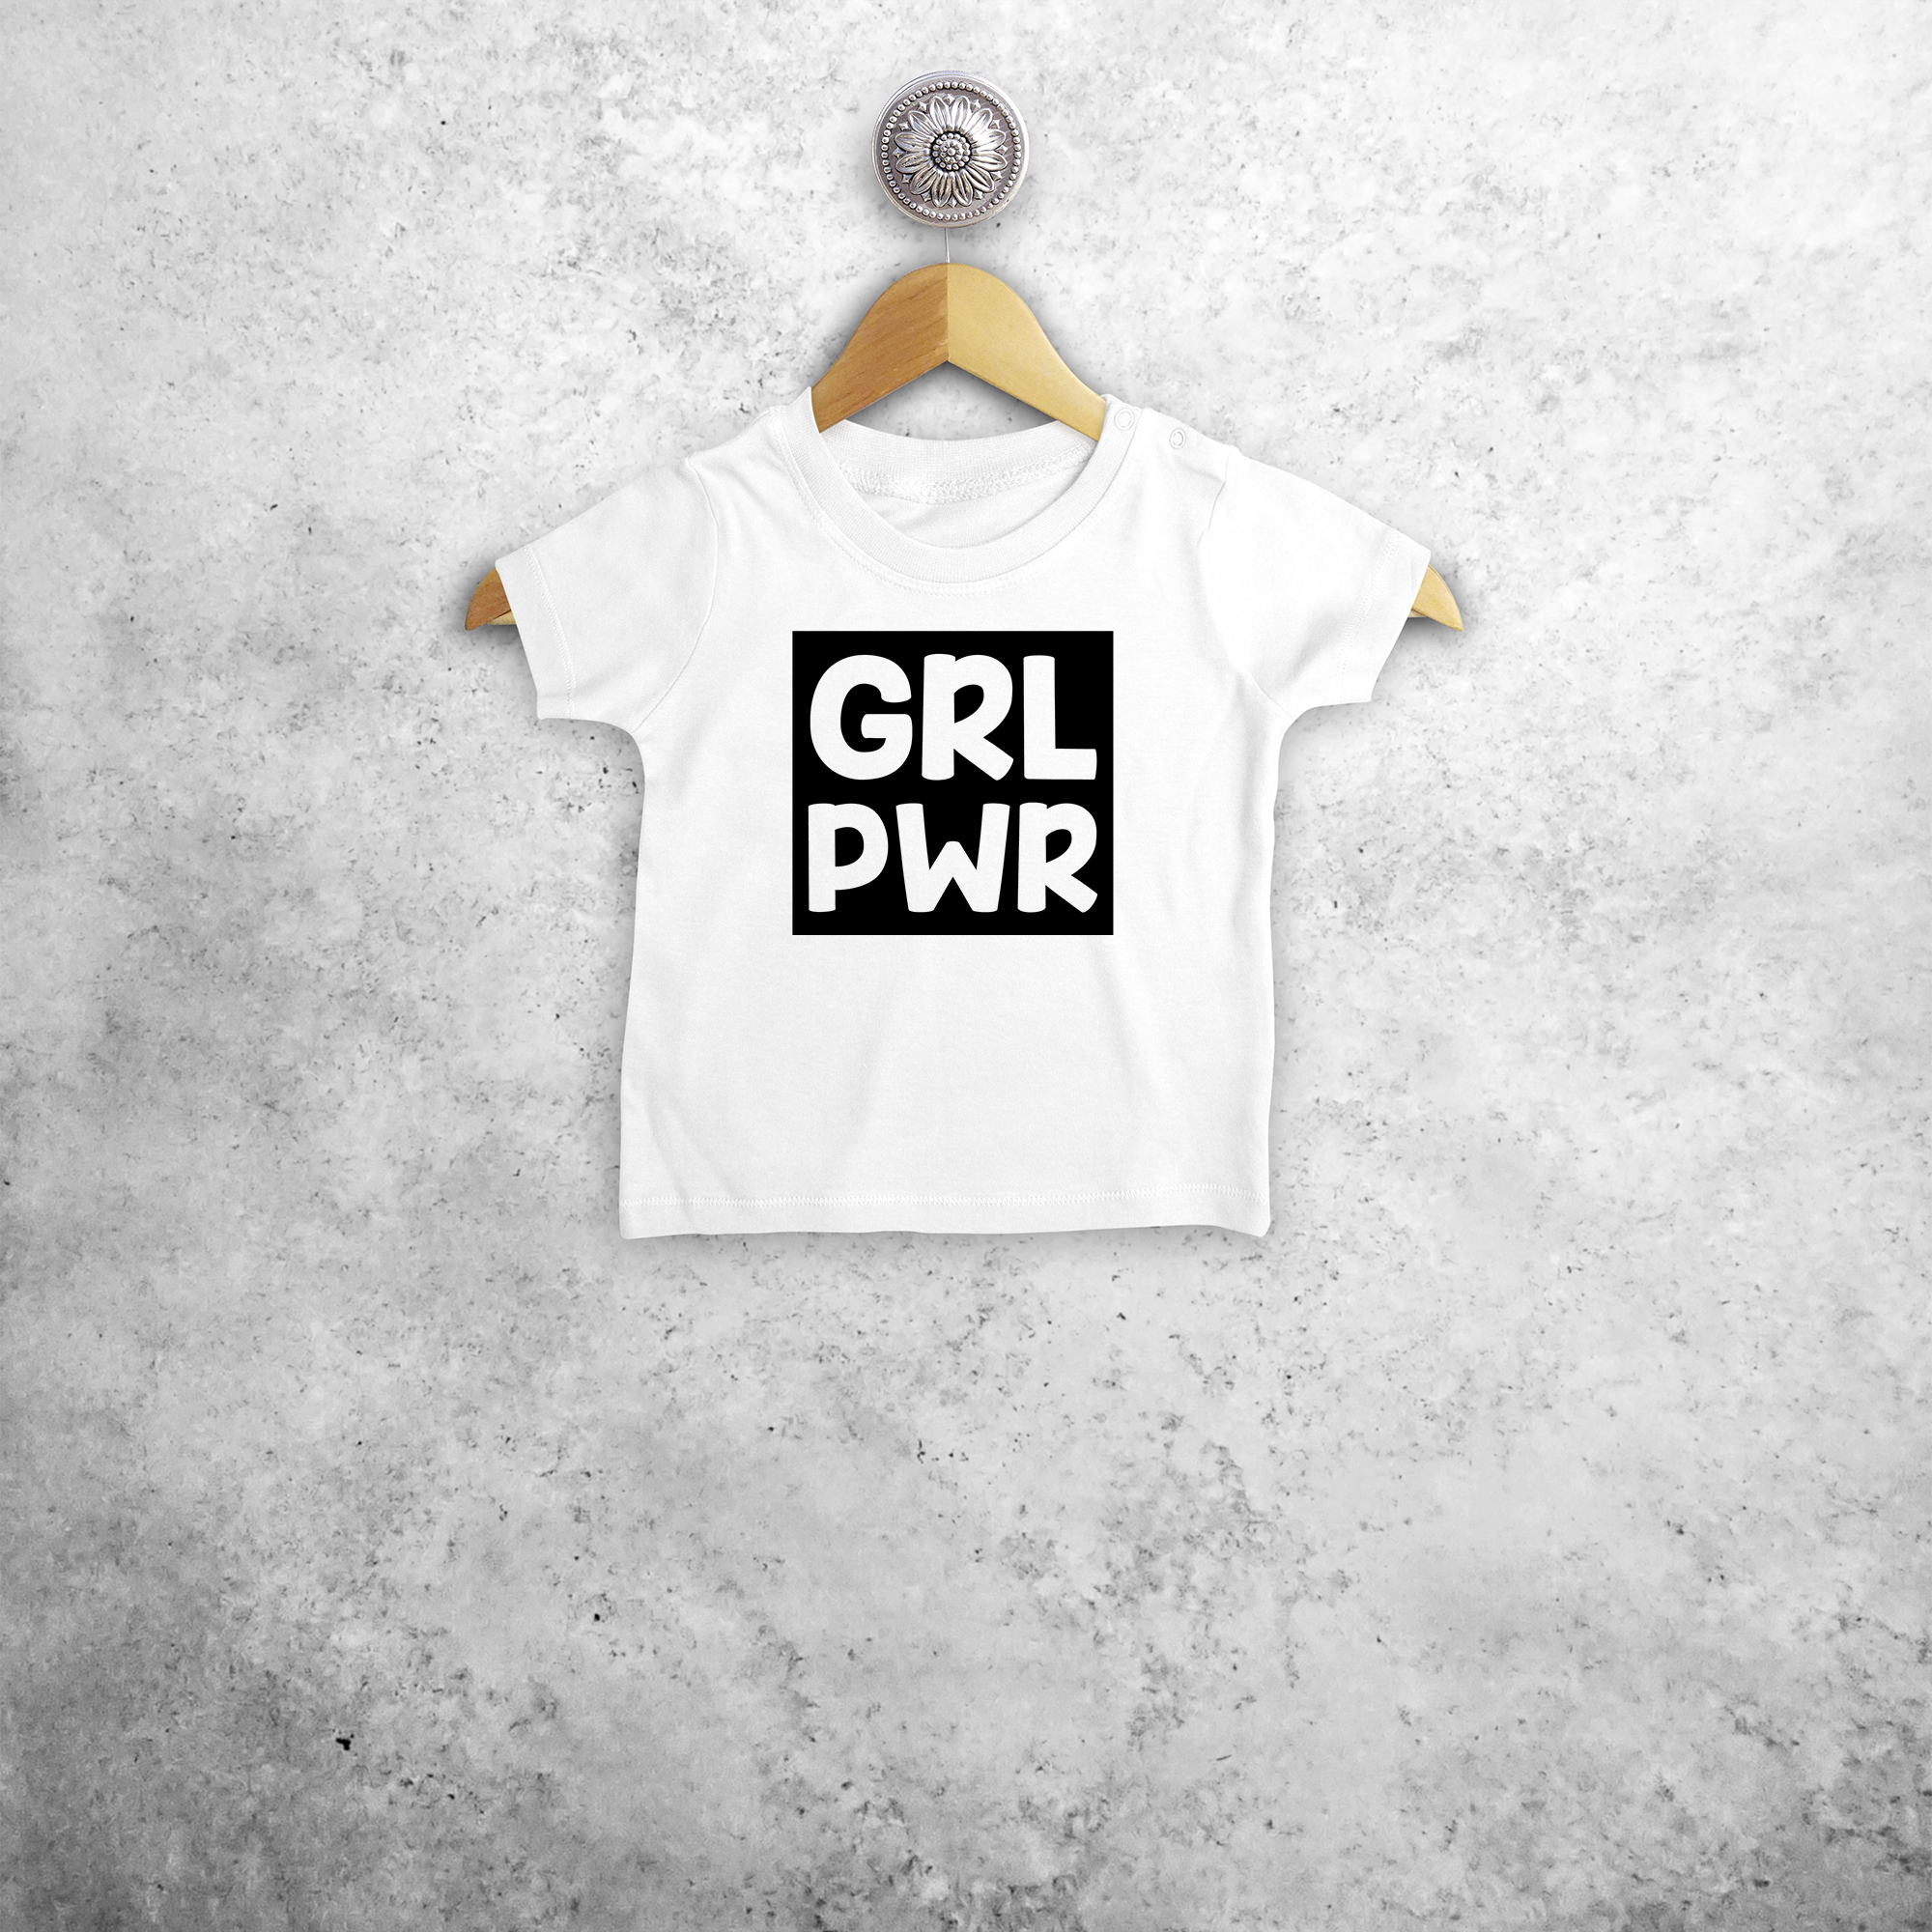 'GRL PWR' baby shortsleeve shirt